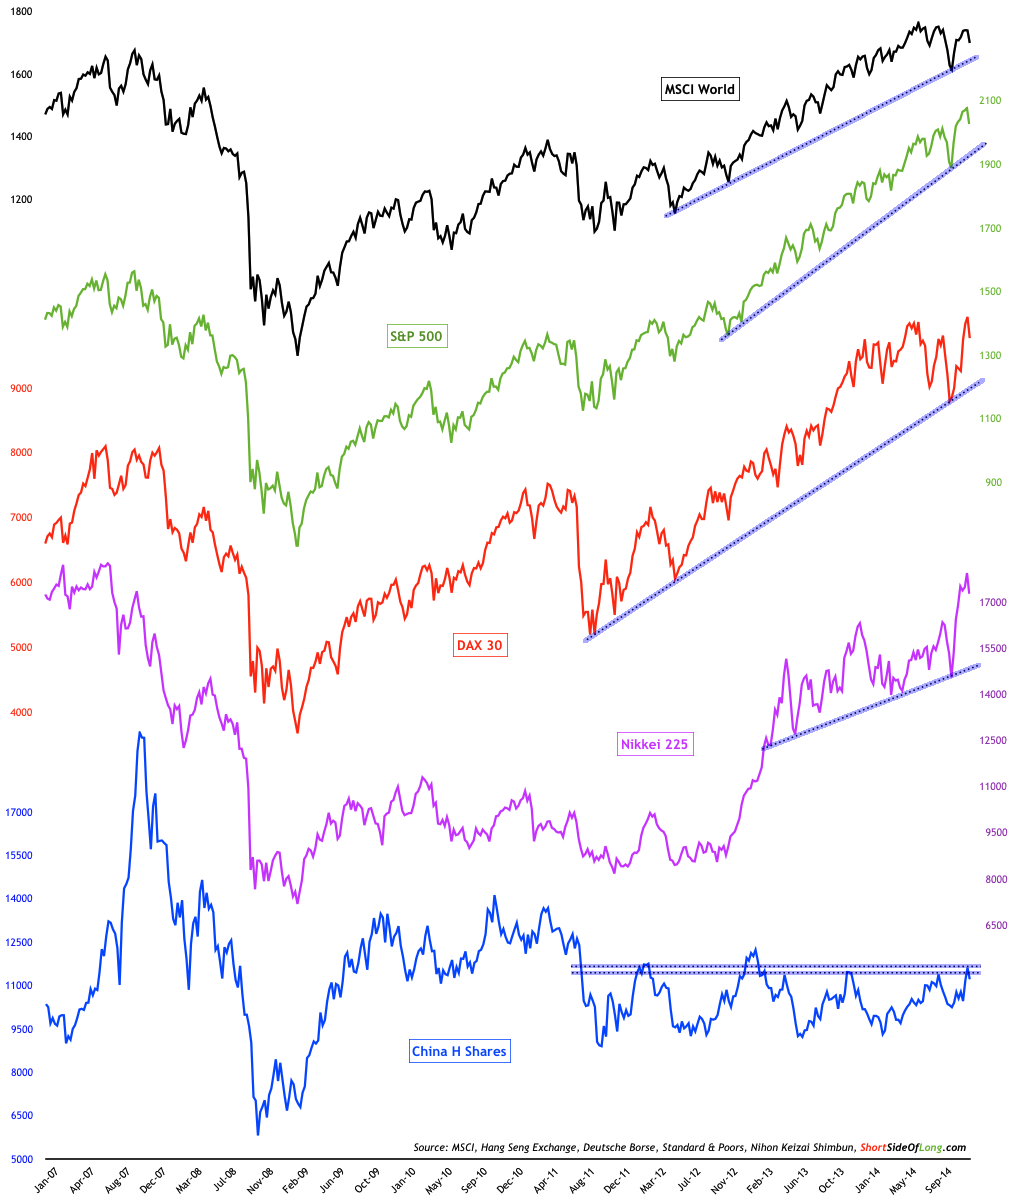 MSCI World vs S&P 500 vs DAX vs Nikkei vs China H Shares 